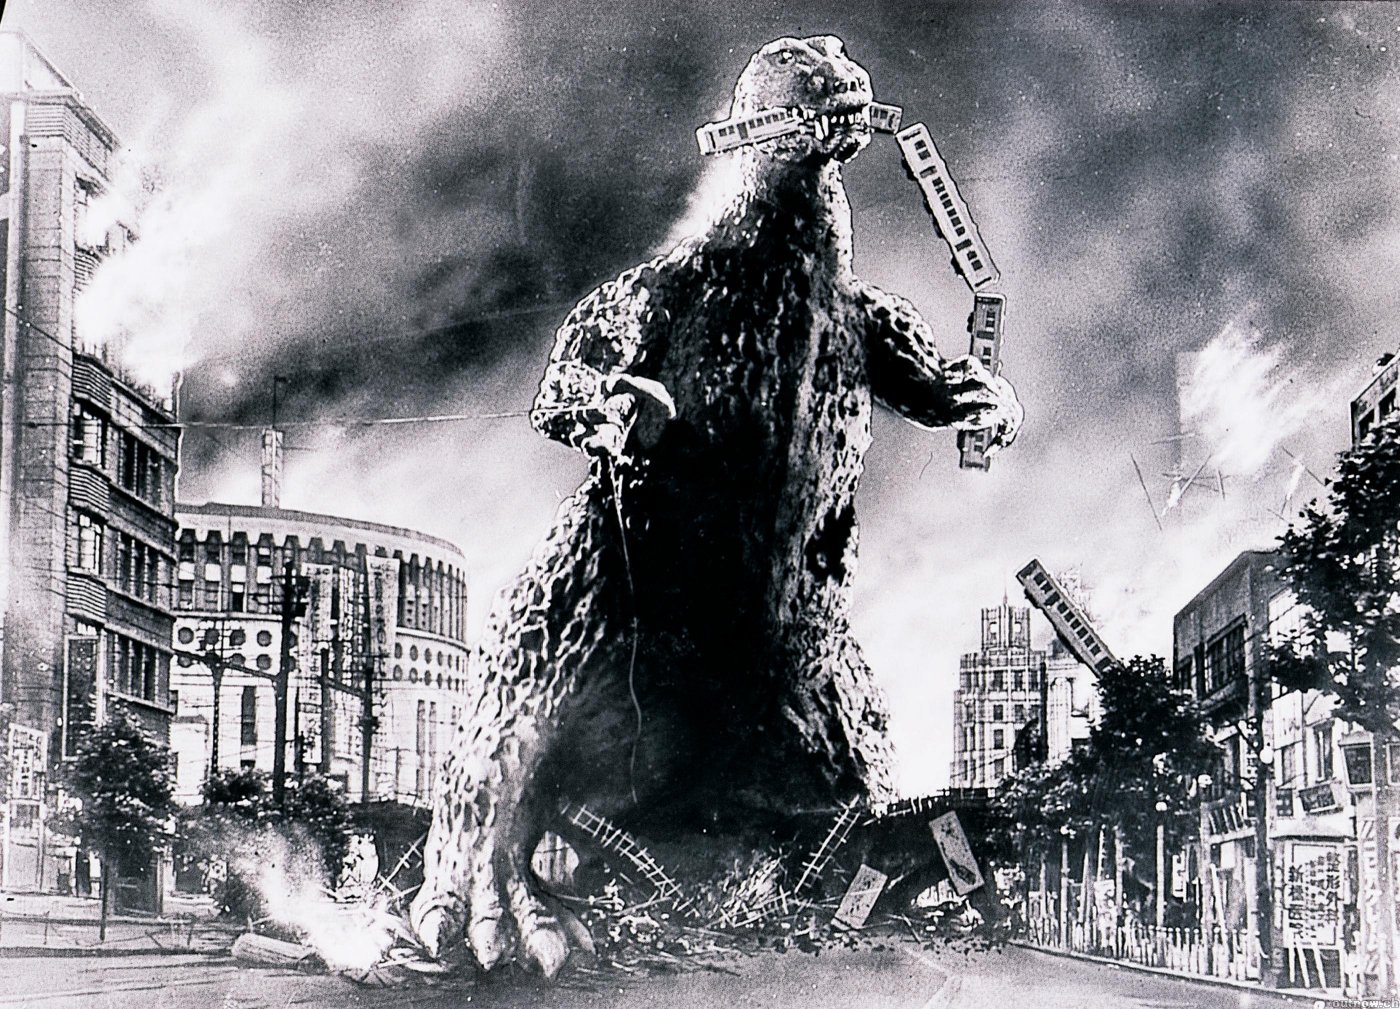 The Original Godzilla